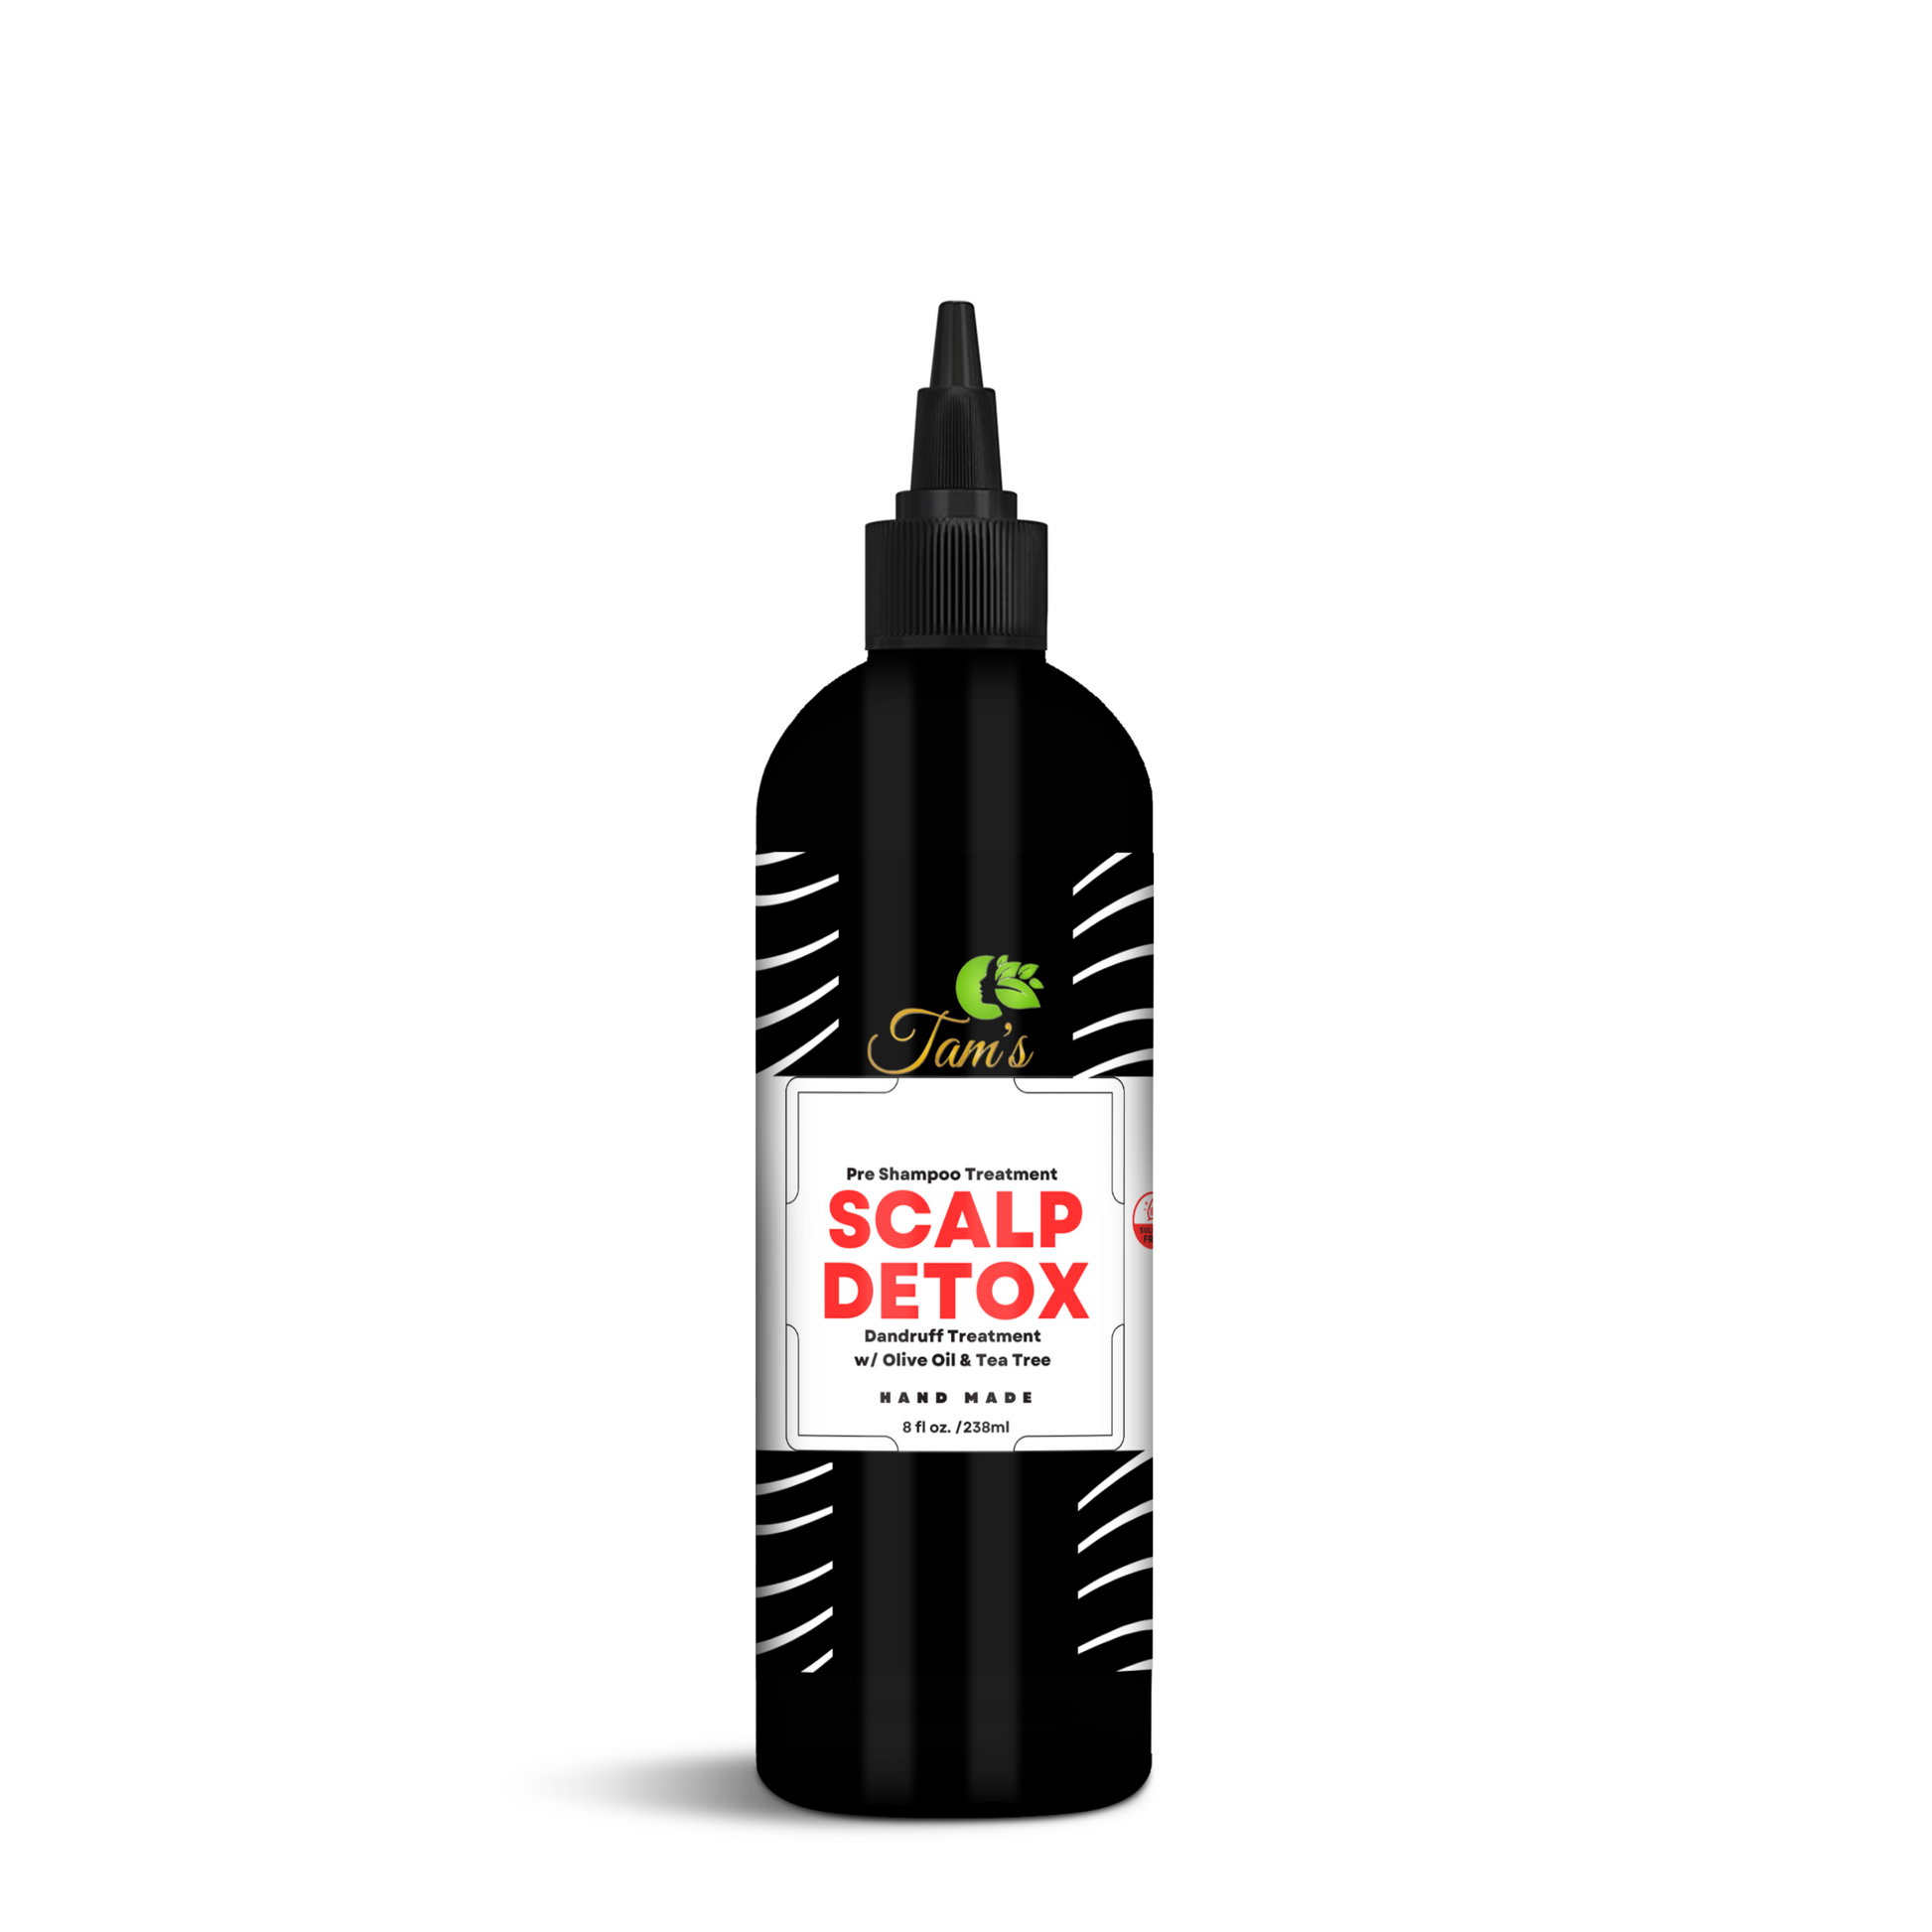 Scalp Detox - Pre Shampoo Treatment - Tam's Products